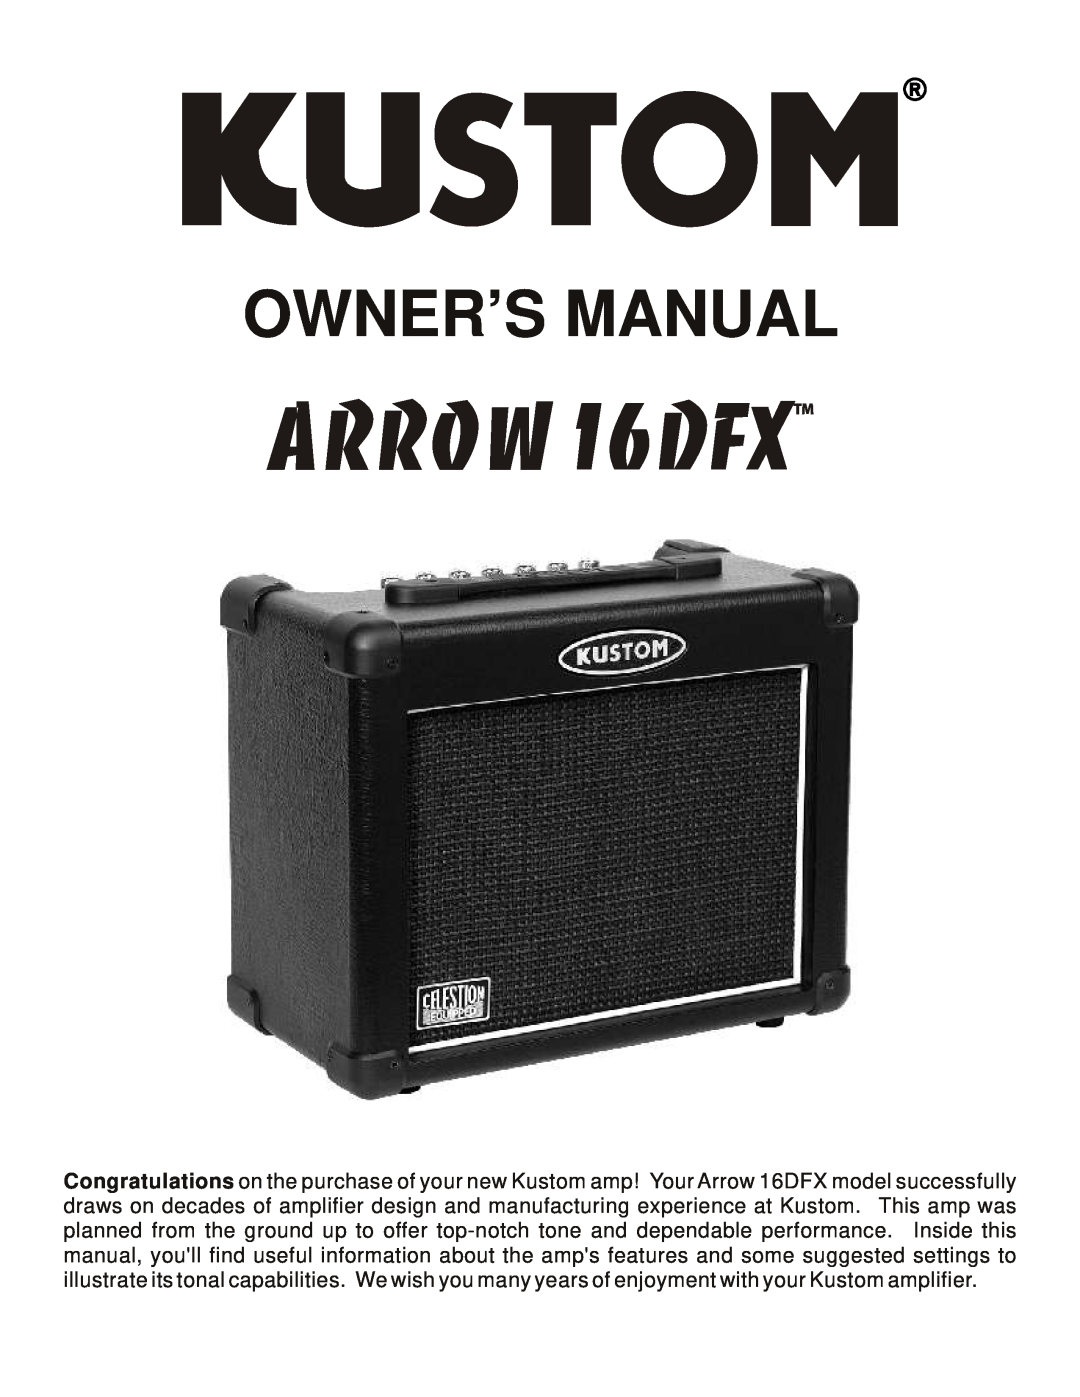 Kustom Arrow 16DFX owner manual 